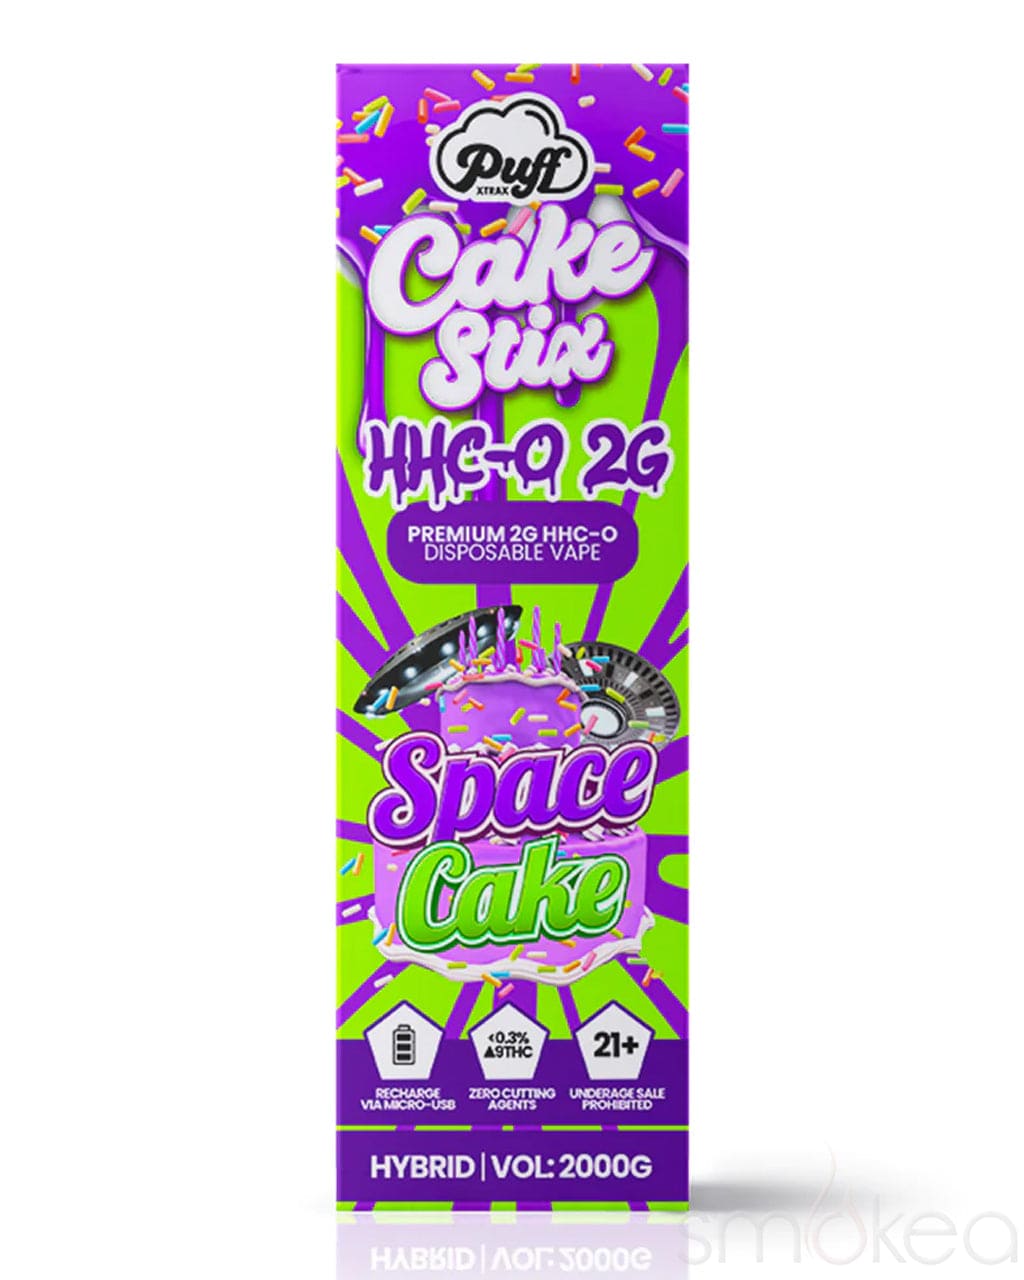 Puff Xtrax 2g HHCO Cake Stix Disposable Vape - Space Cake